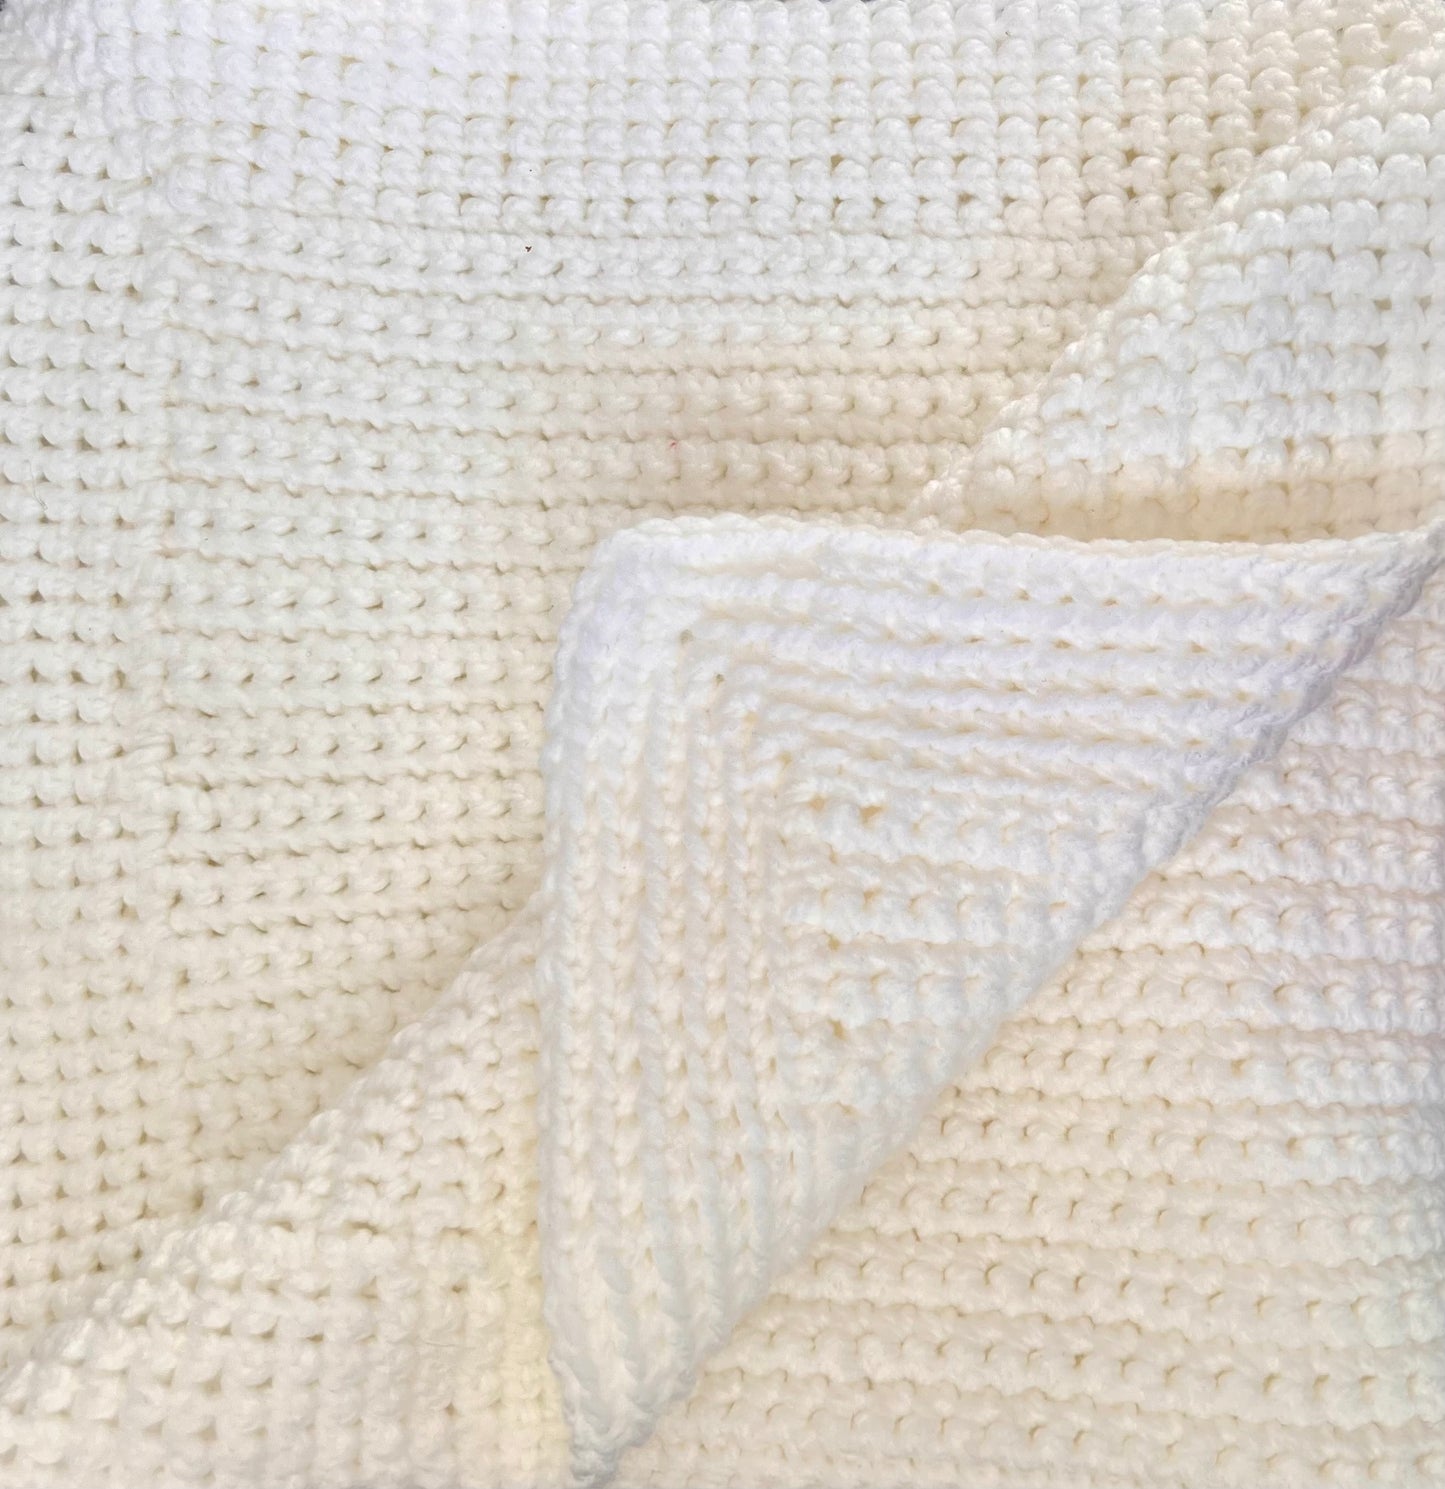 Handmade Crochet Baby Blanket - Chunky Cream